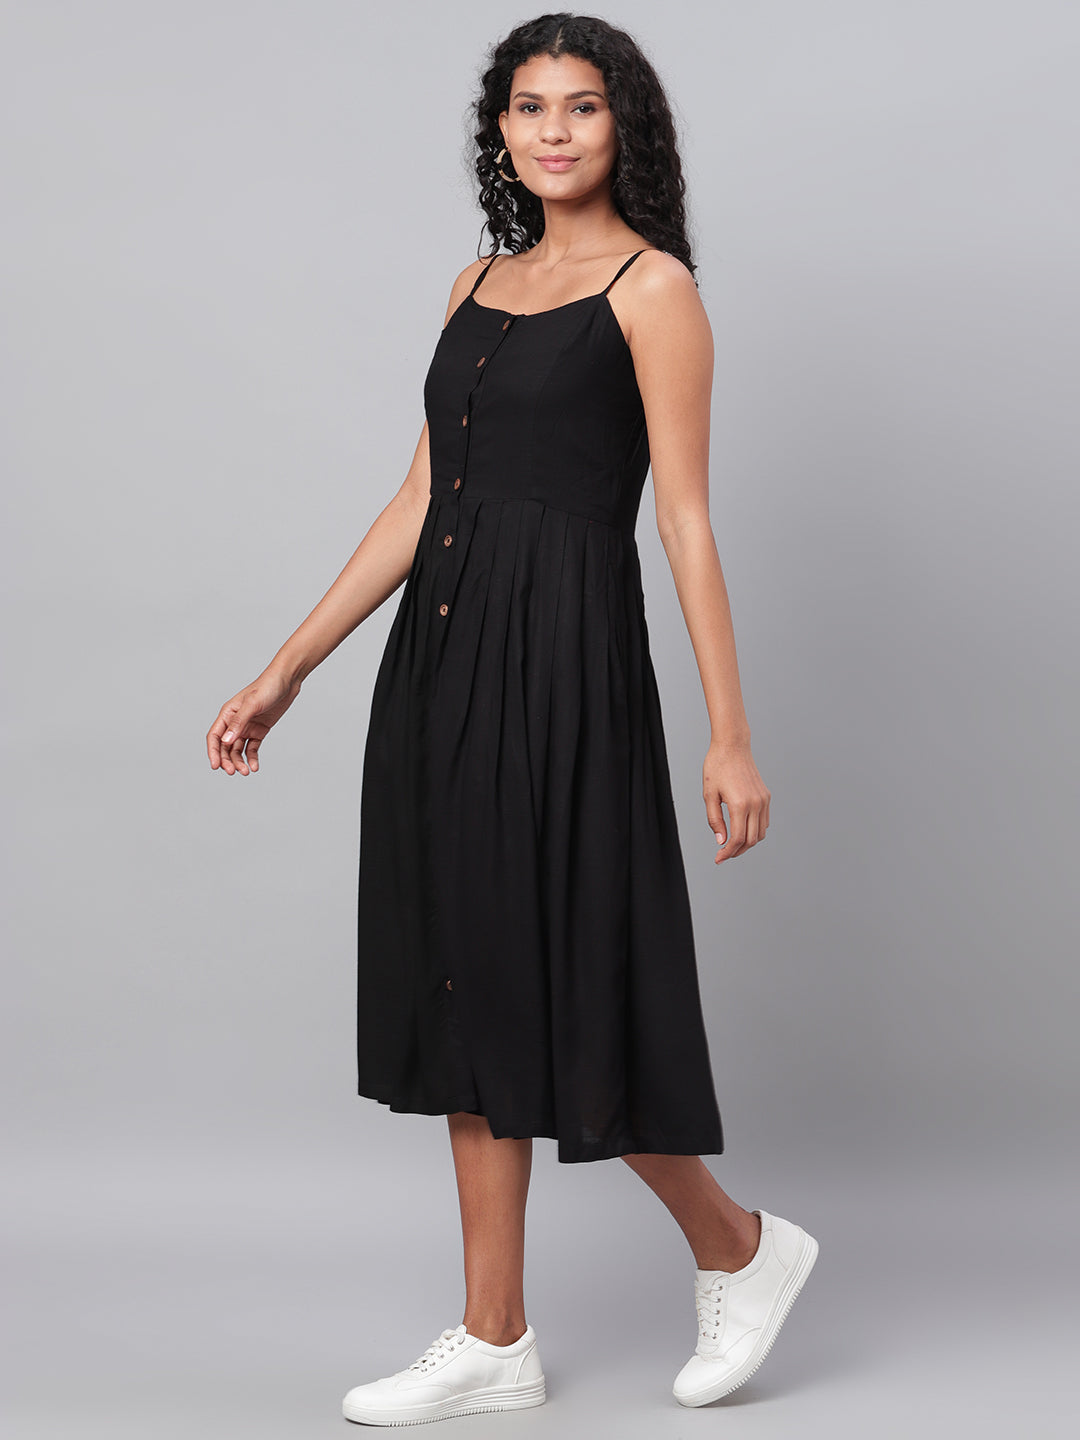 Myshka Women's Black Solid Sleeveless Cotton Streps Neck Casual Dress